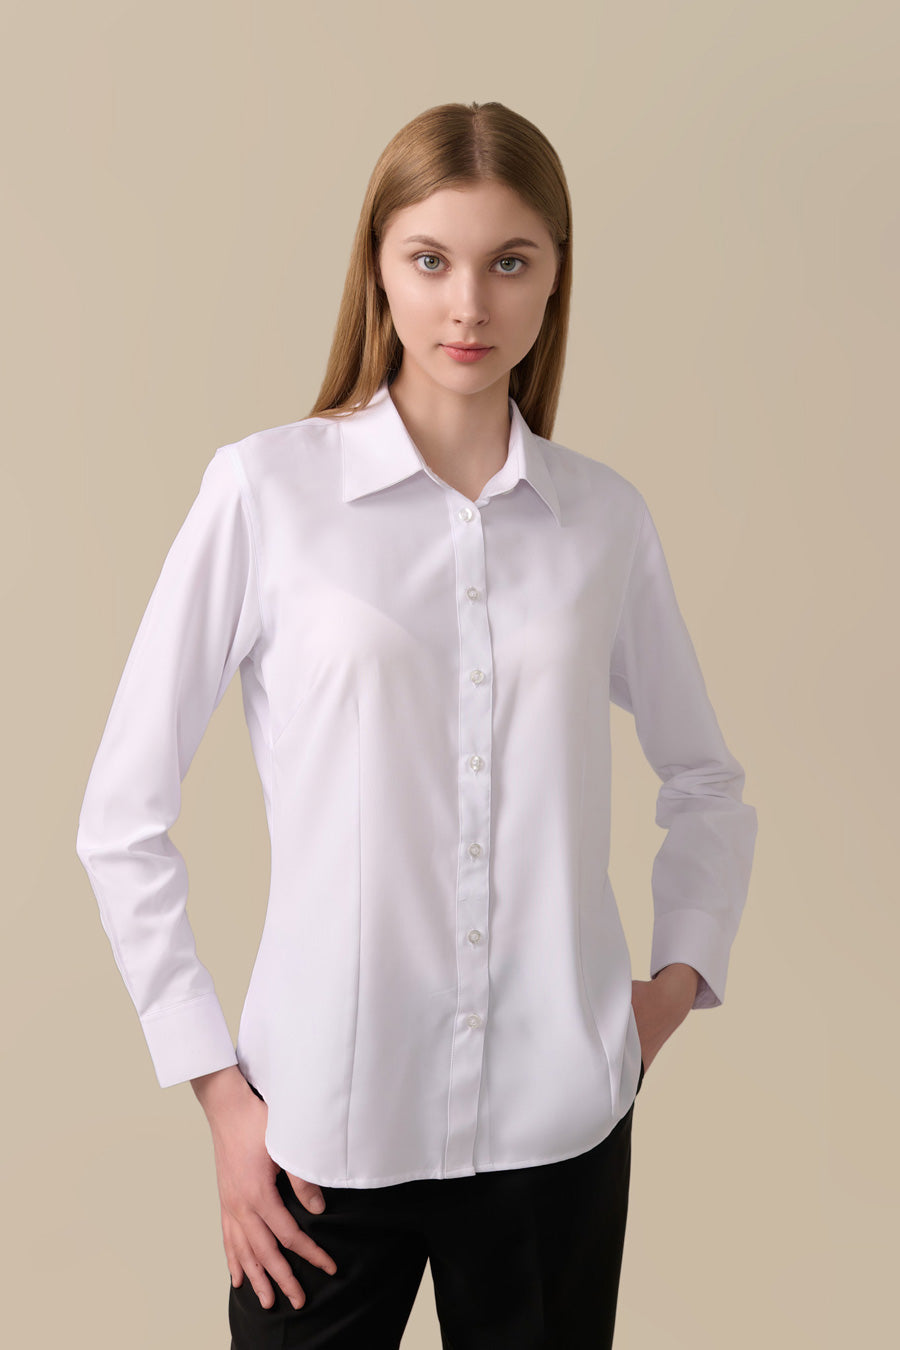 Coffee Dress Shirt for Women - White